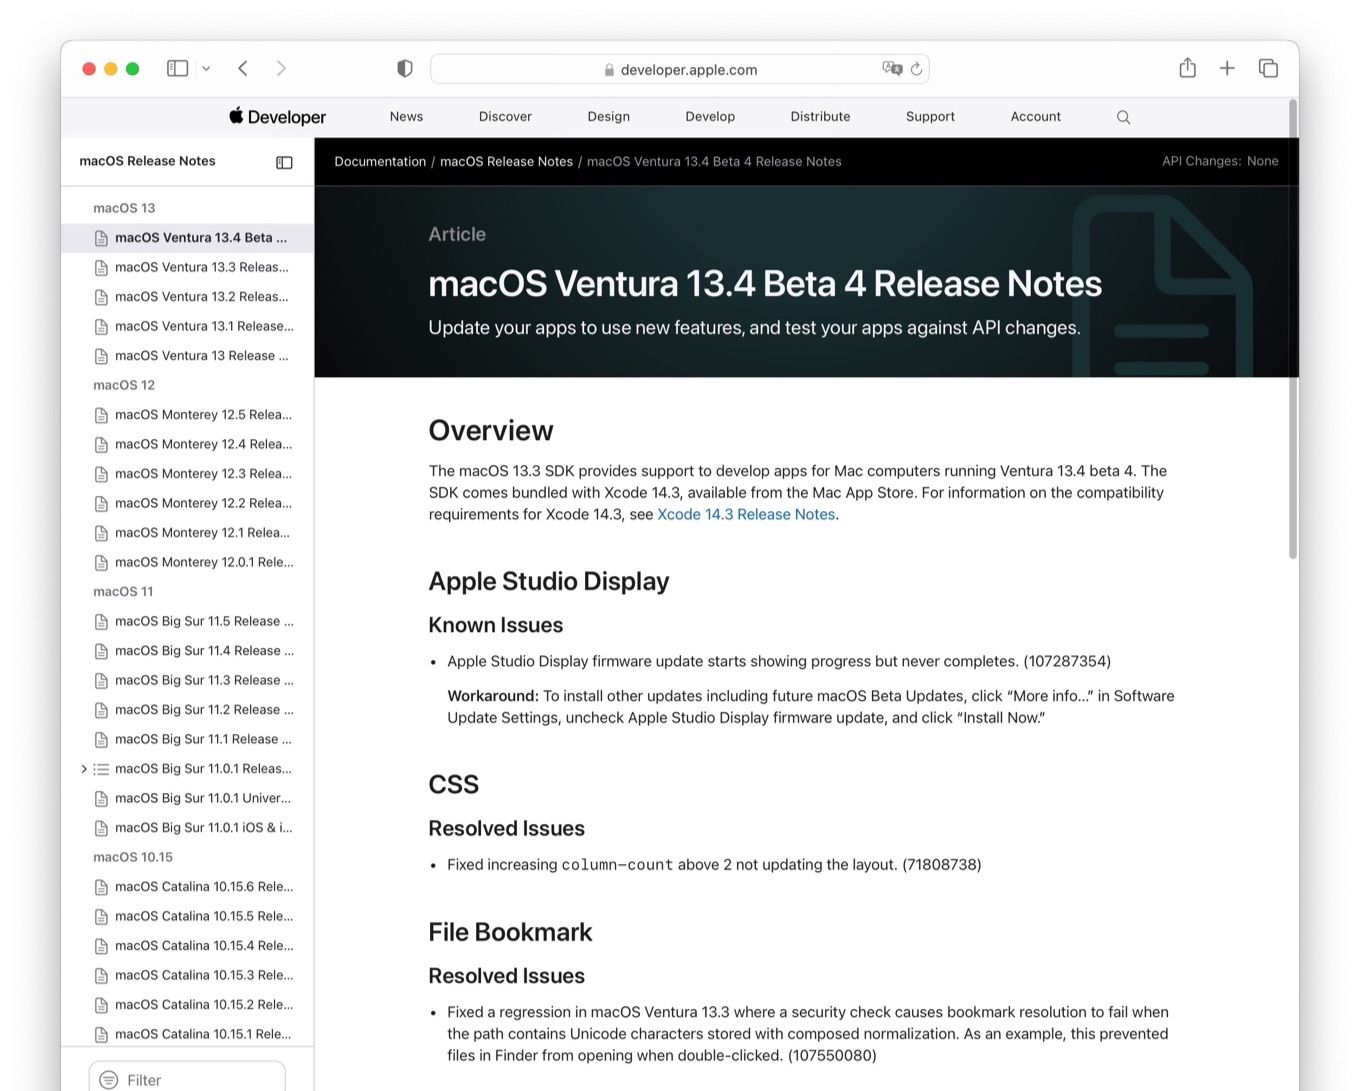 macOS Ventura 13.4 Beta 4 Release Notes